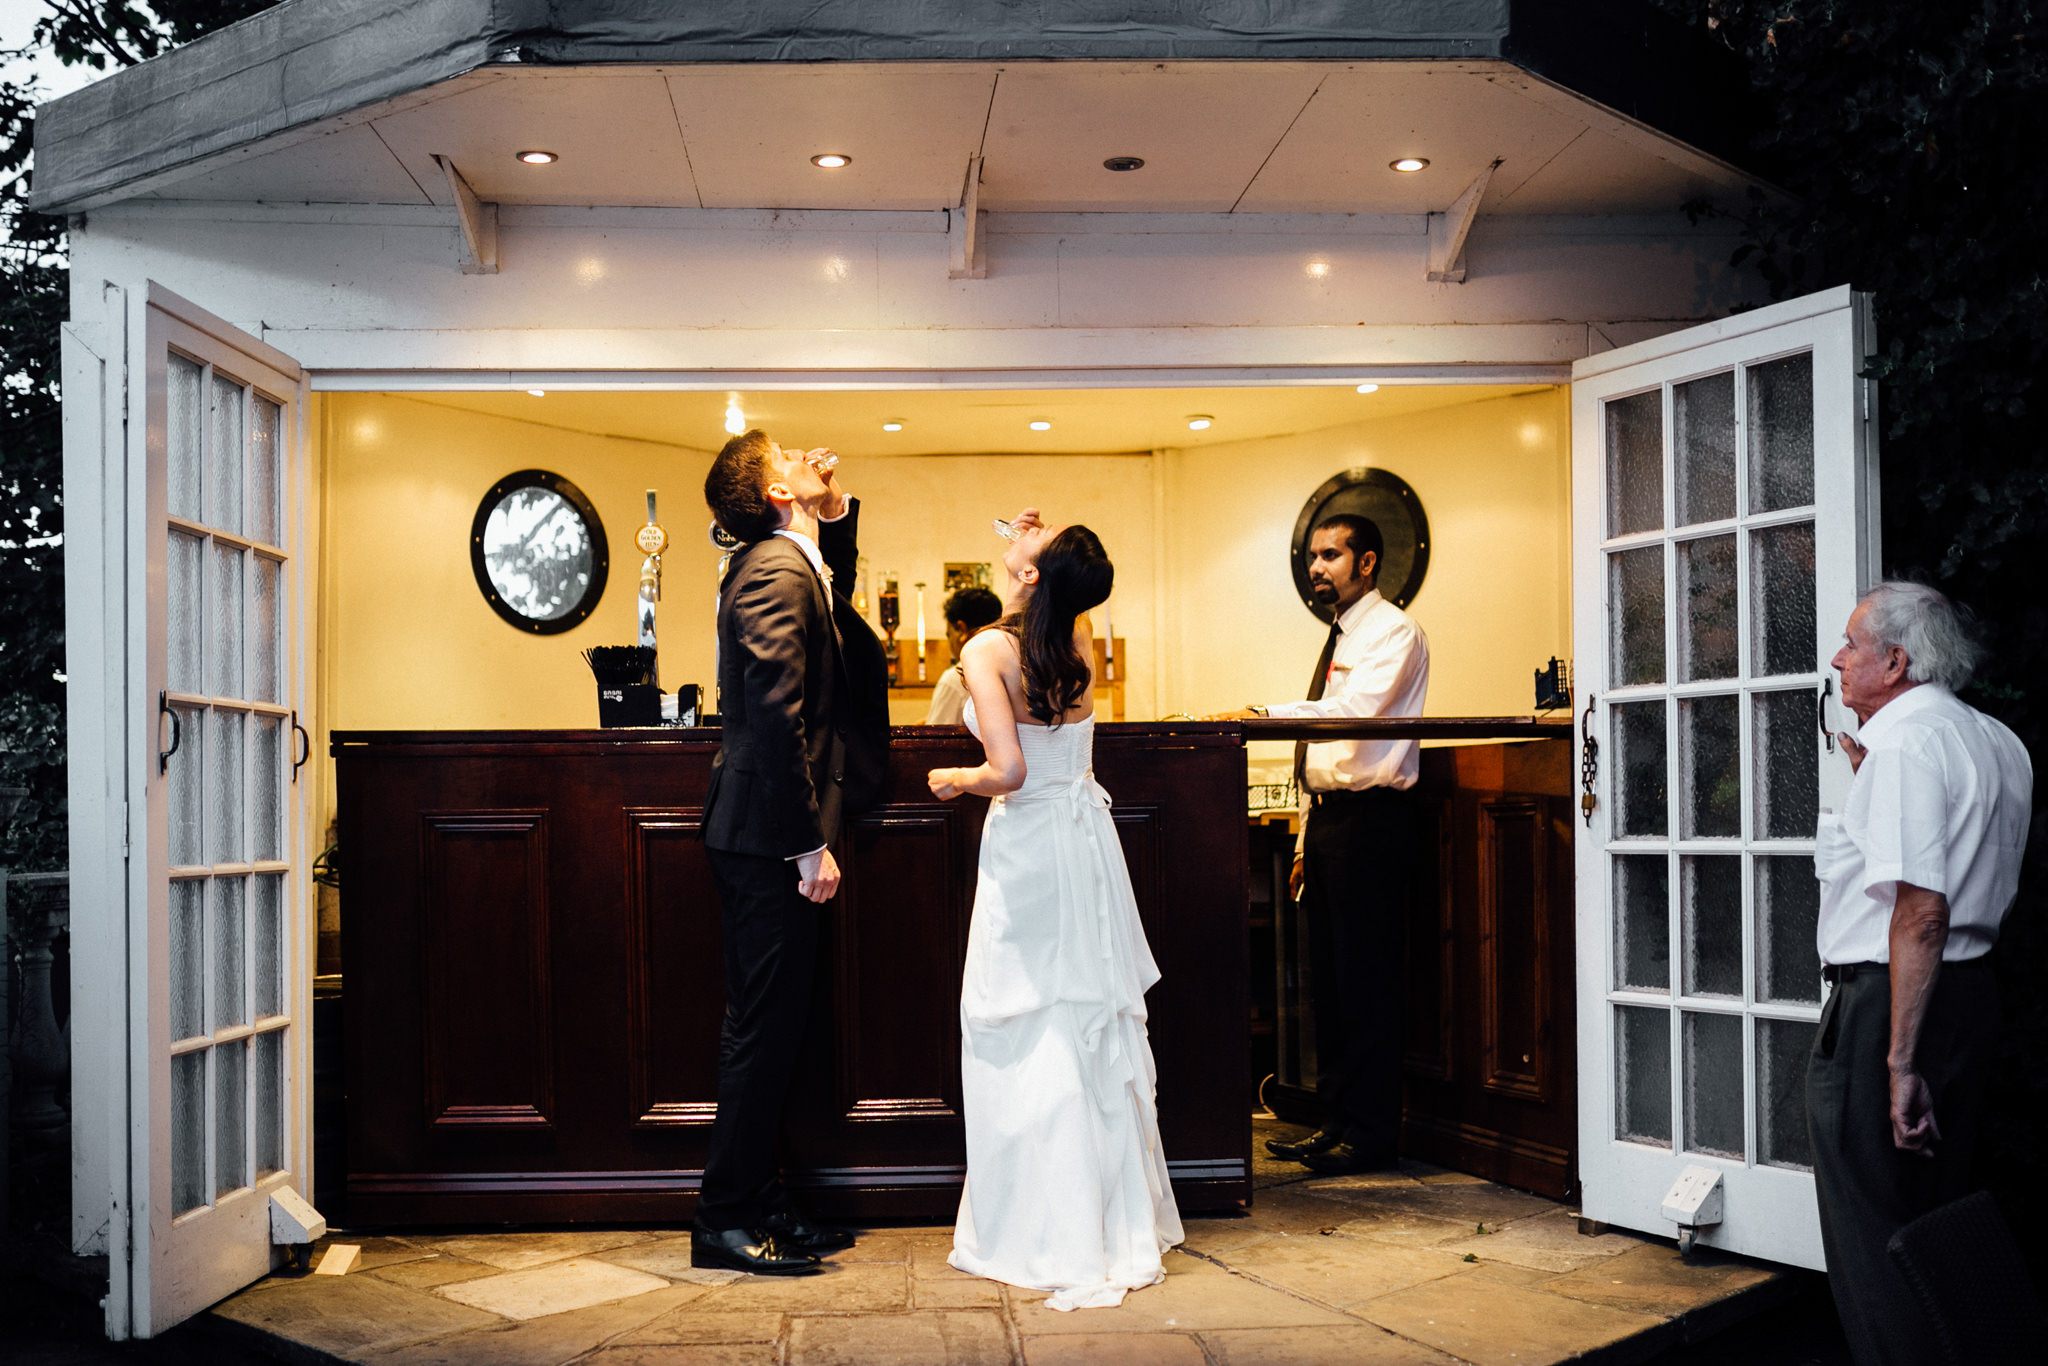 documentary wedding photography london and brighton speeches hampton court palace